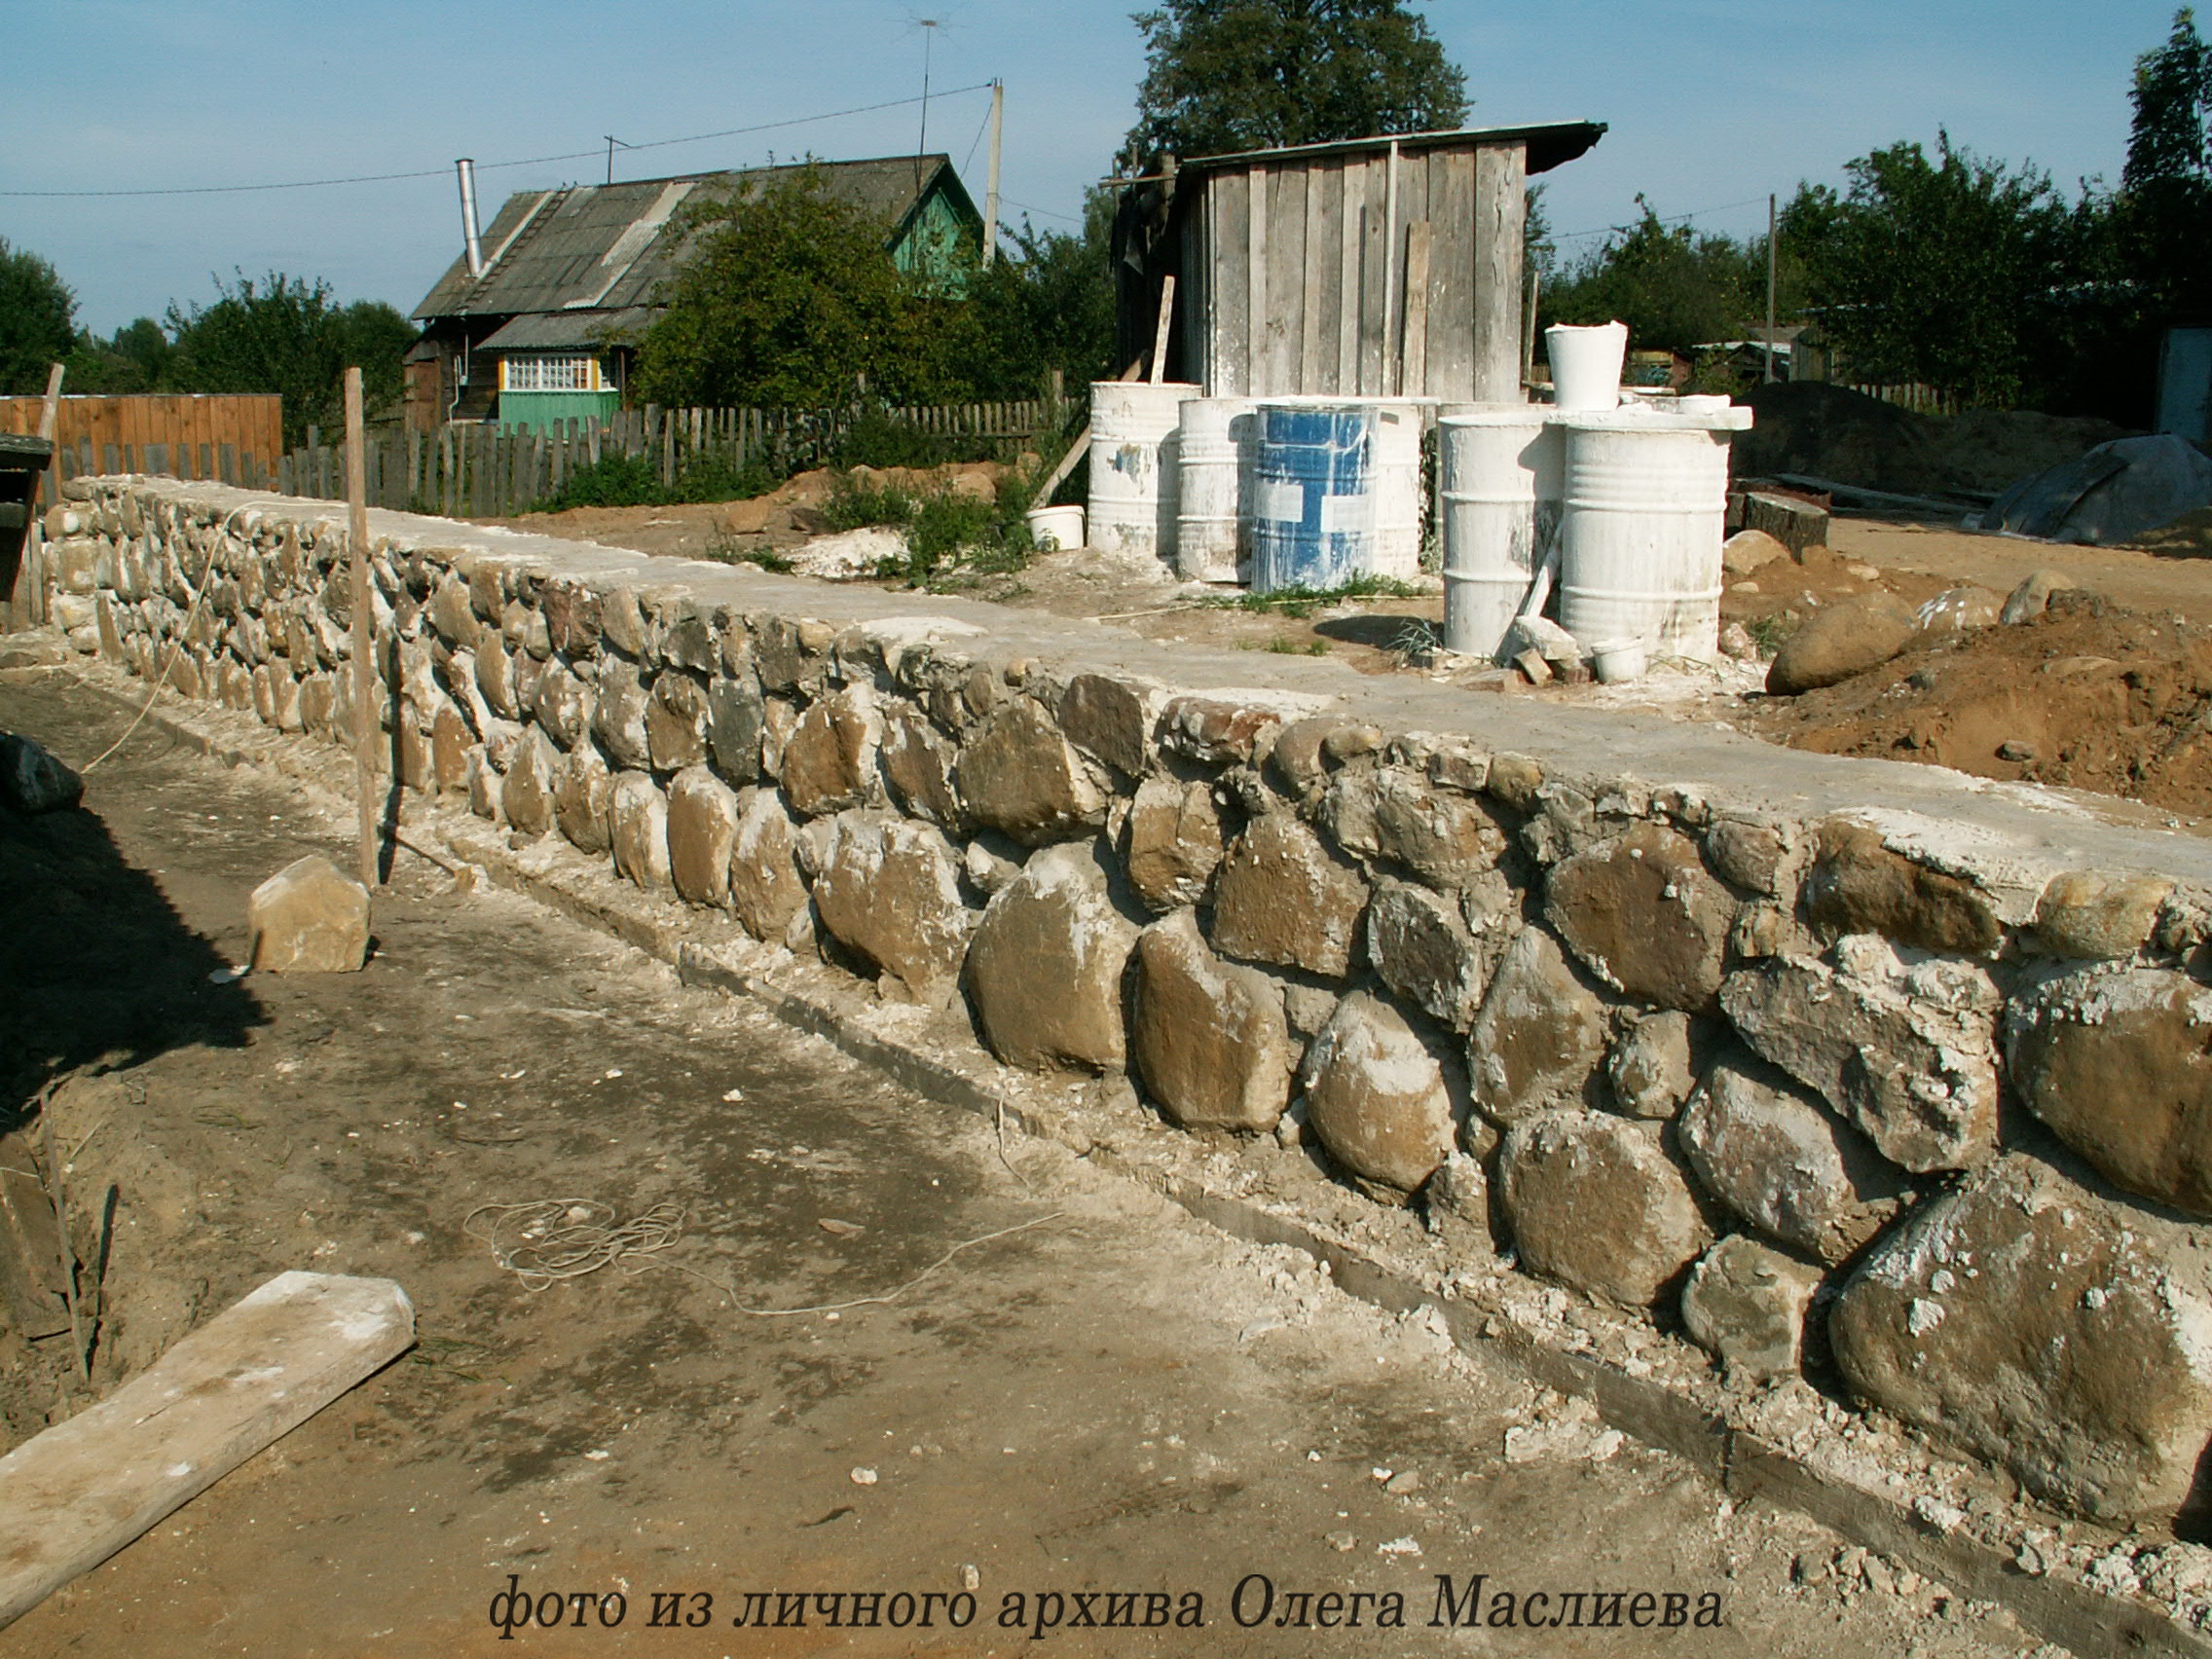  Возведение фундаментов храма. Фото Лето 2012 г. Маслиев О.И.